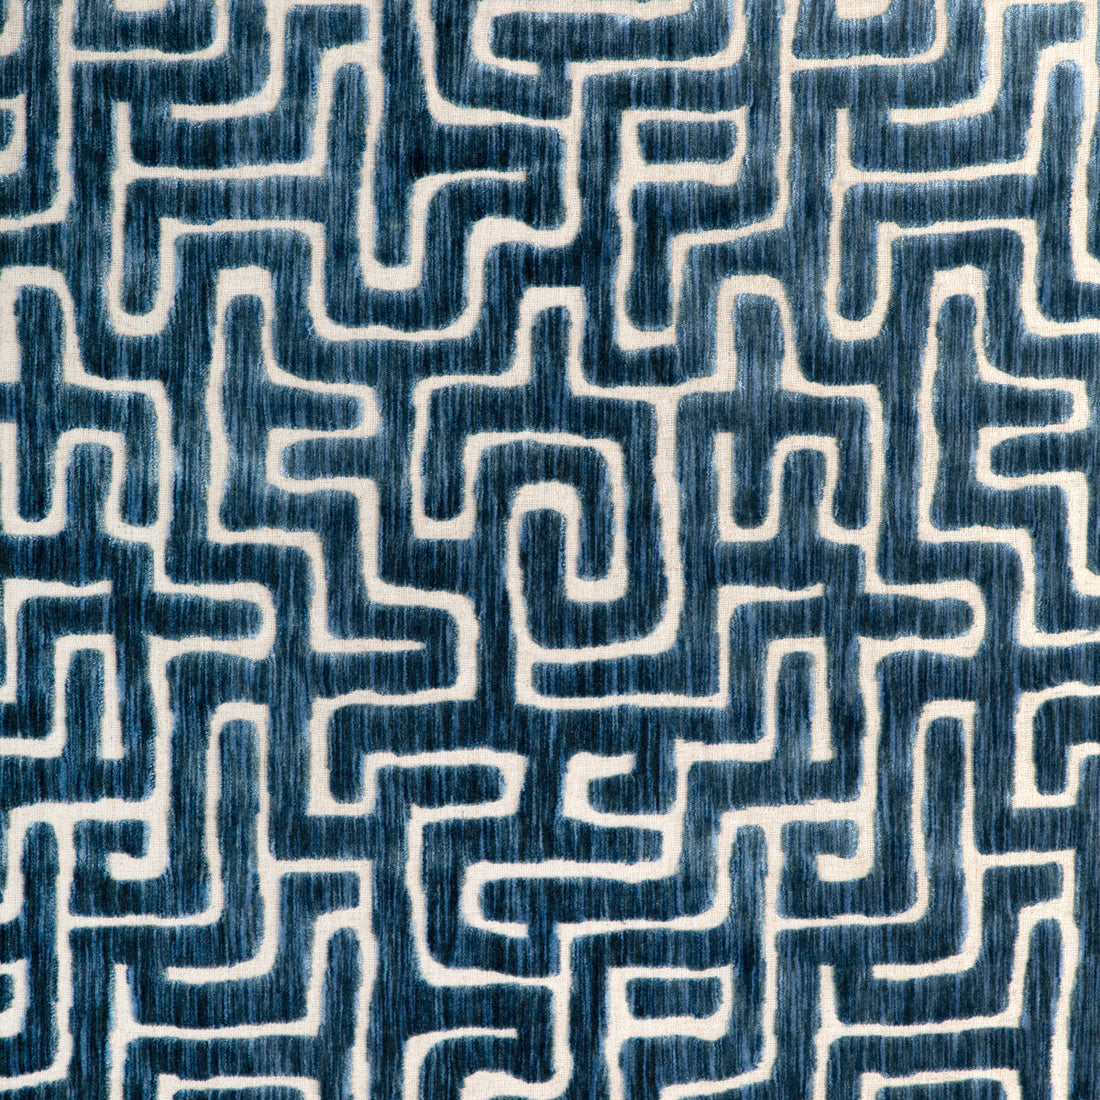 Kravet Design fabric in 35721-5 color - pattern 35721.5.0 - by Kravet Design in the Modern Velvets collection